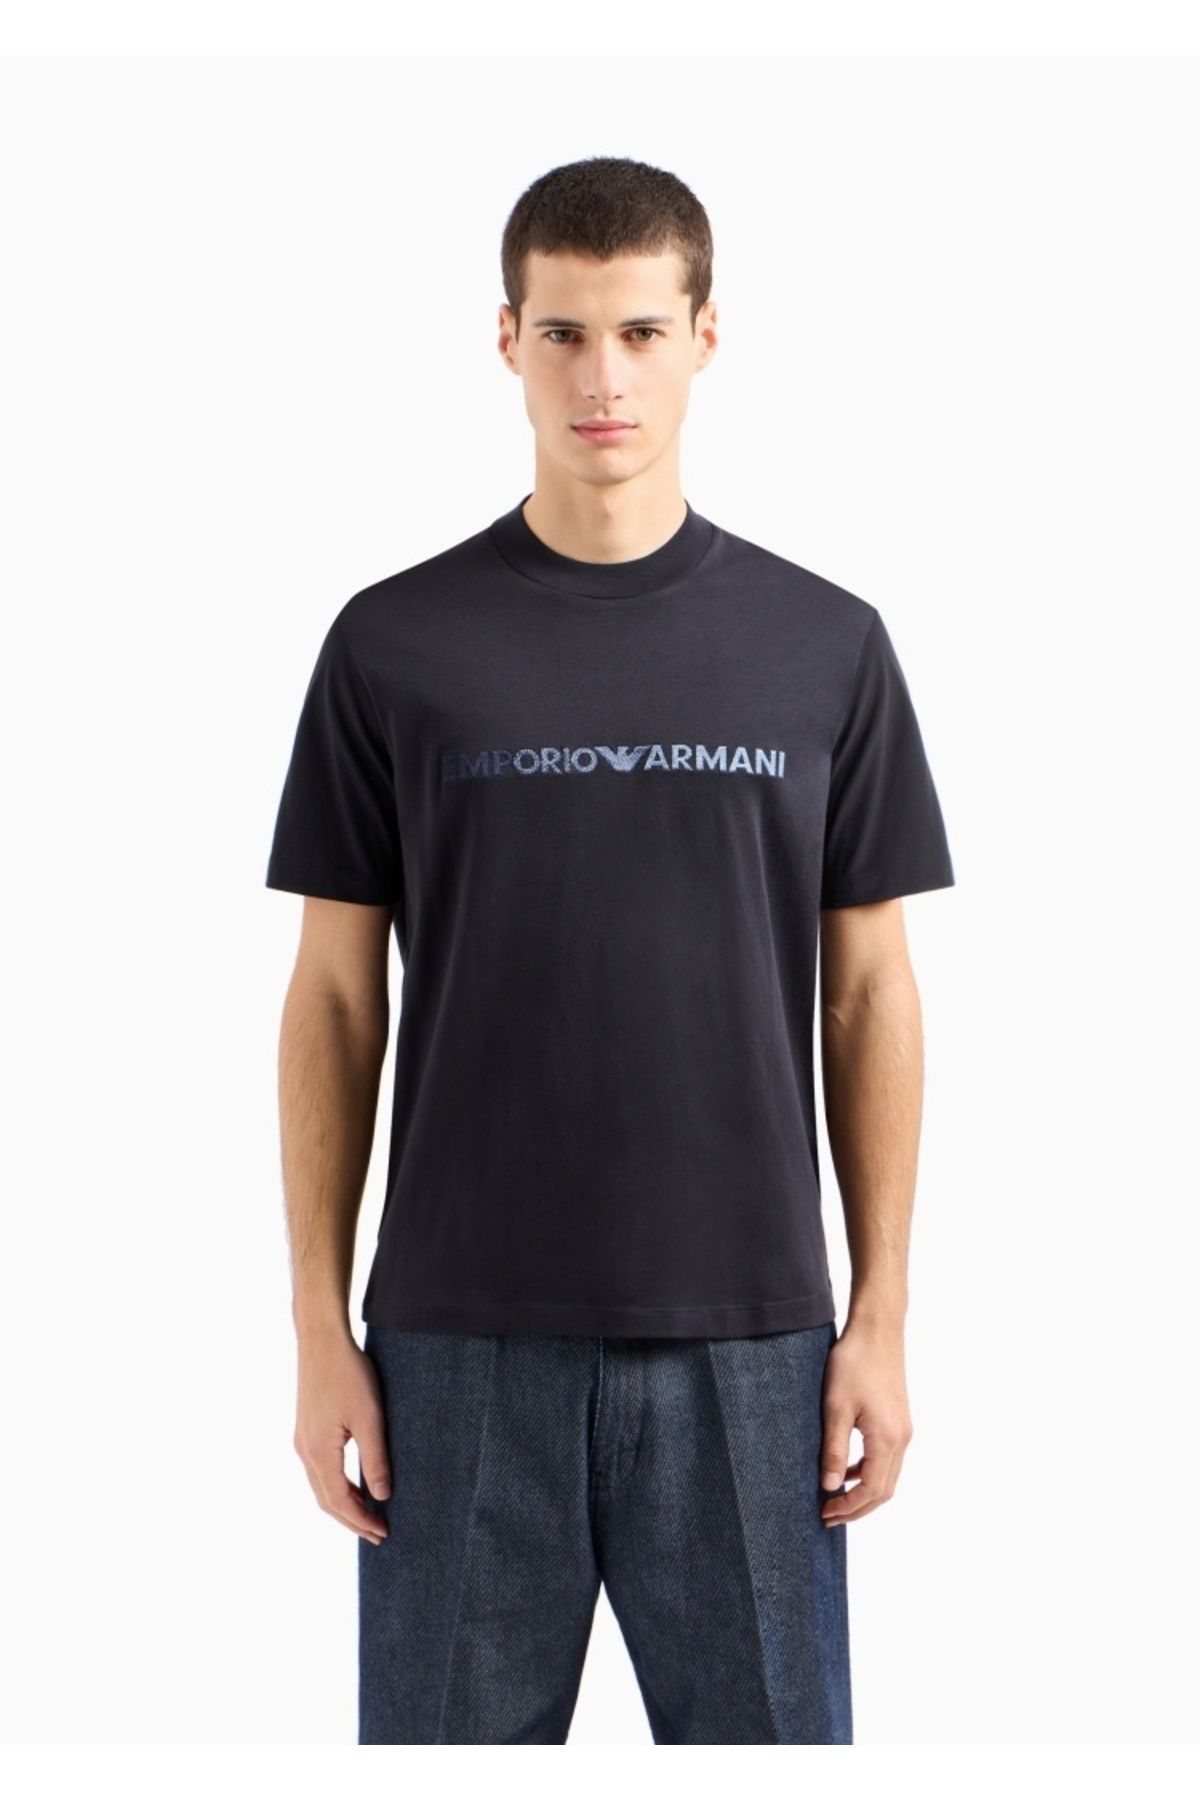 Emporio Armani Erkek Pamuklu Kısa Boy Rahat Kesim Günlük Lacivert1 T-Shirt 3D1TG3 1JPZZ-09R2